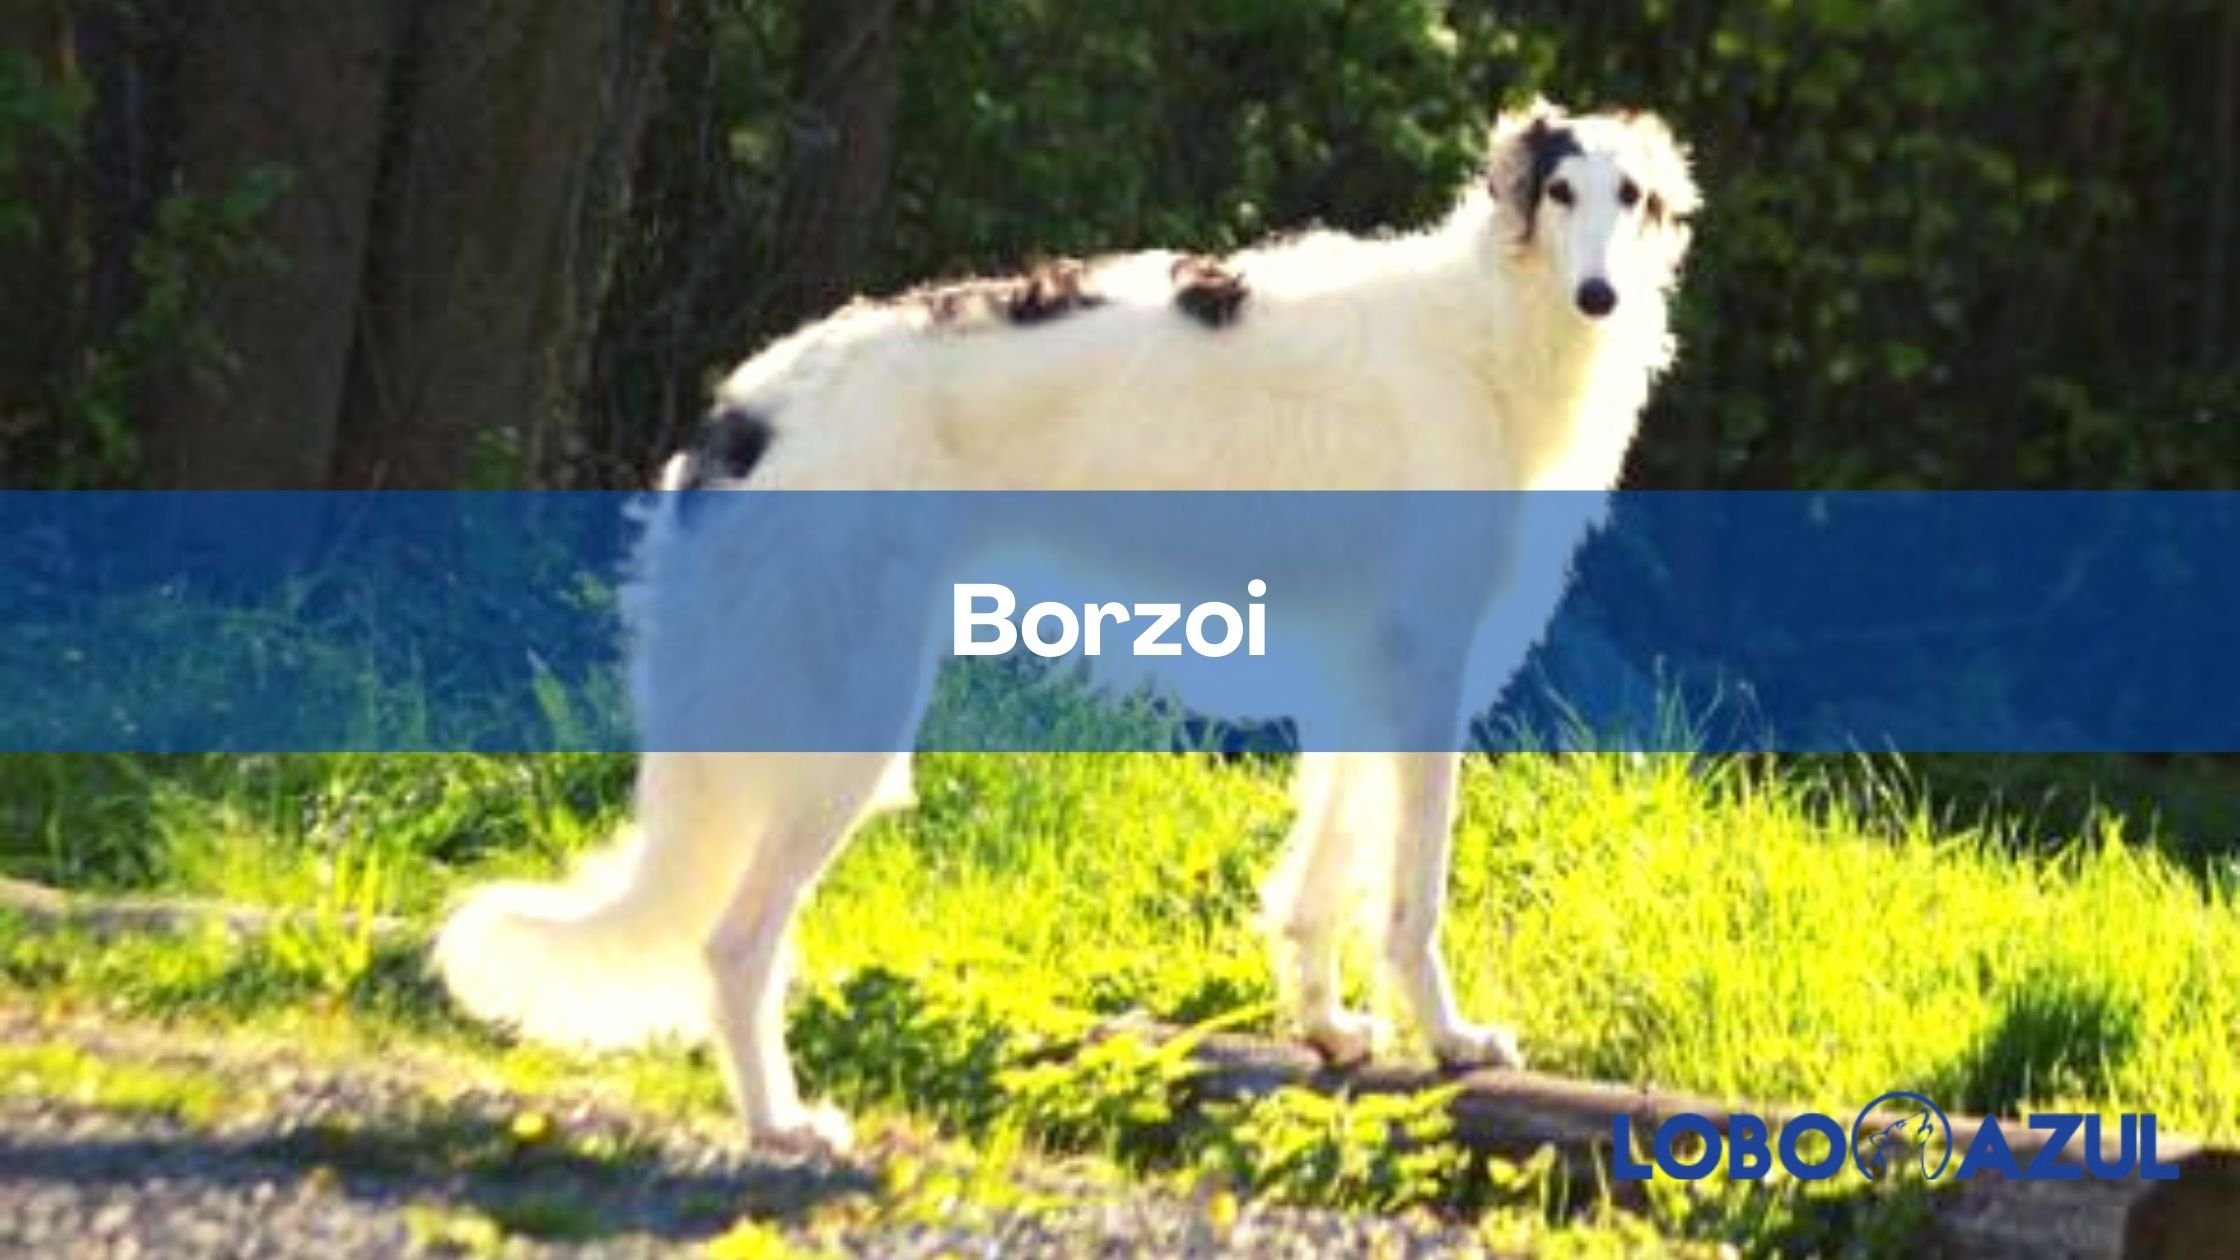 Borzoi – Aristocracia canina